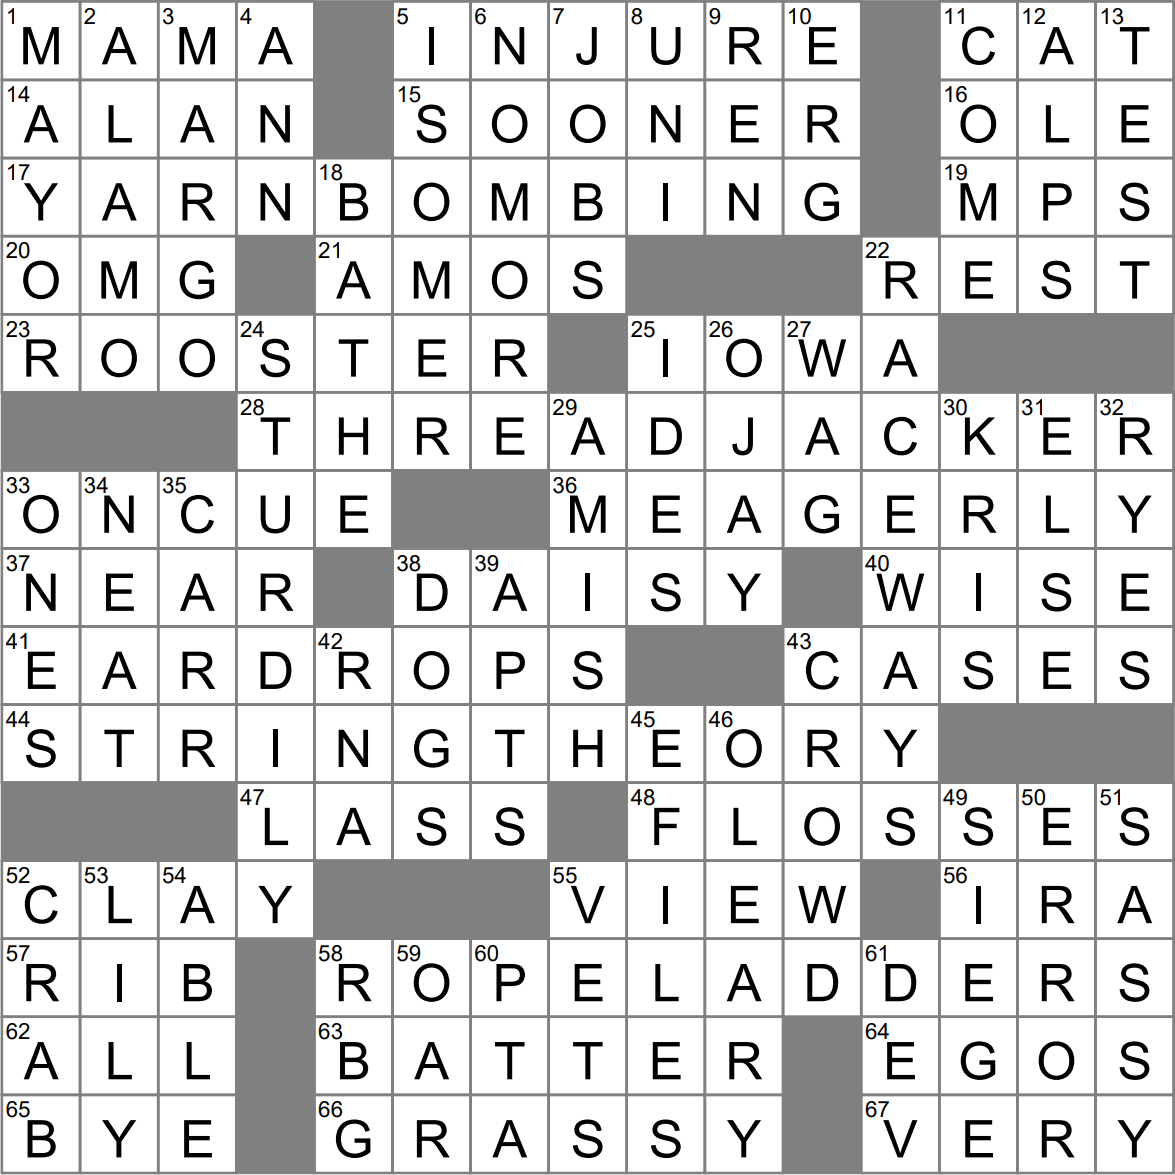 LA Times Crossword 1 May 23, Monday - LAXCrossword.com